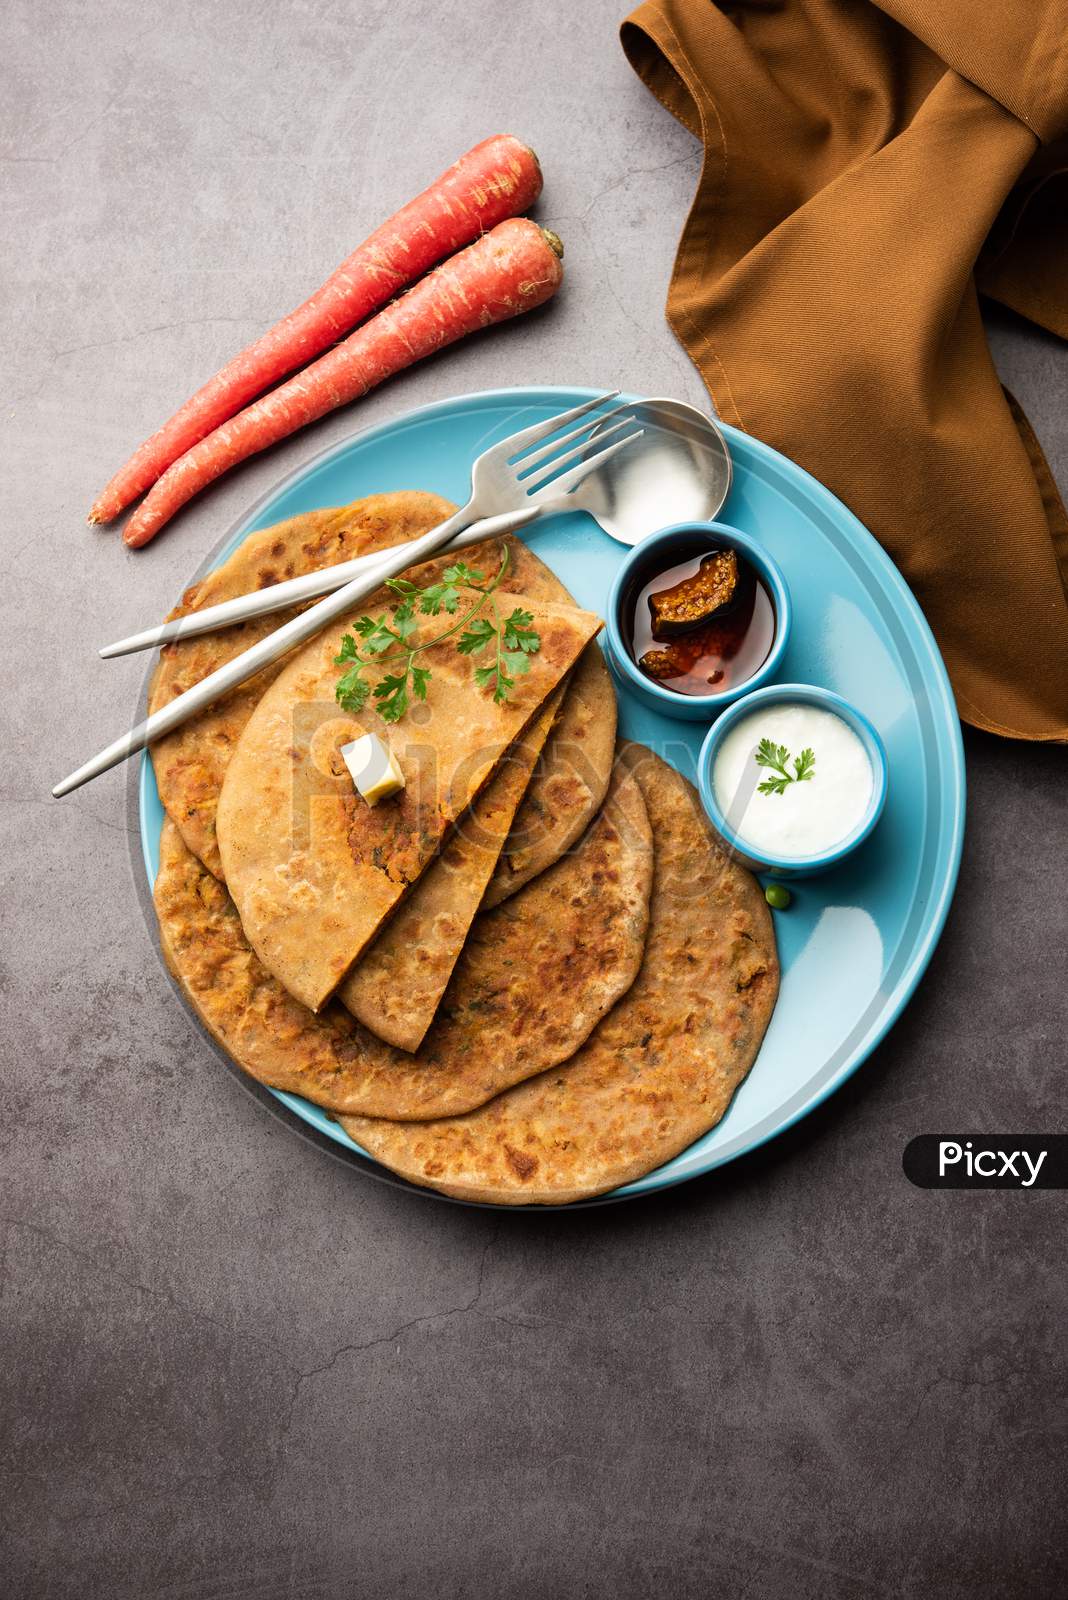 Gajar Ka Paratha Or Carrot Parotha Or Stuffed Flatbread Is A Seasonal Indian Breakfast Recipe